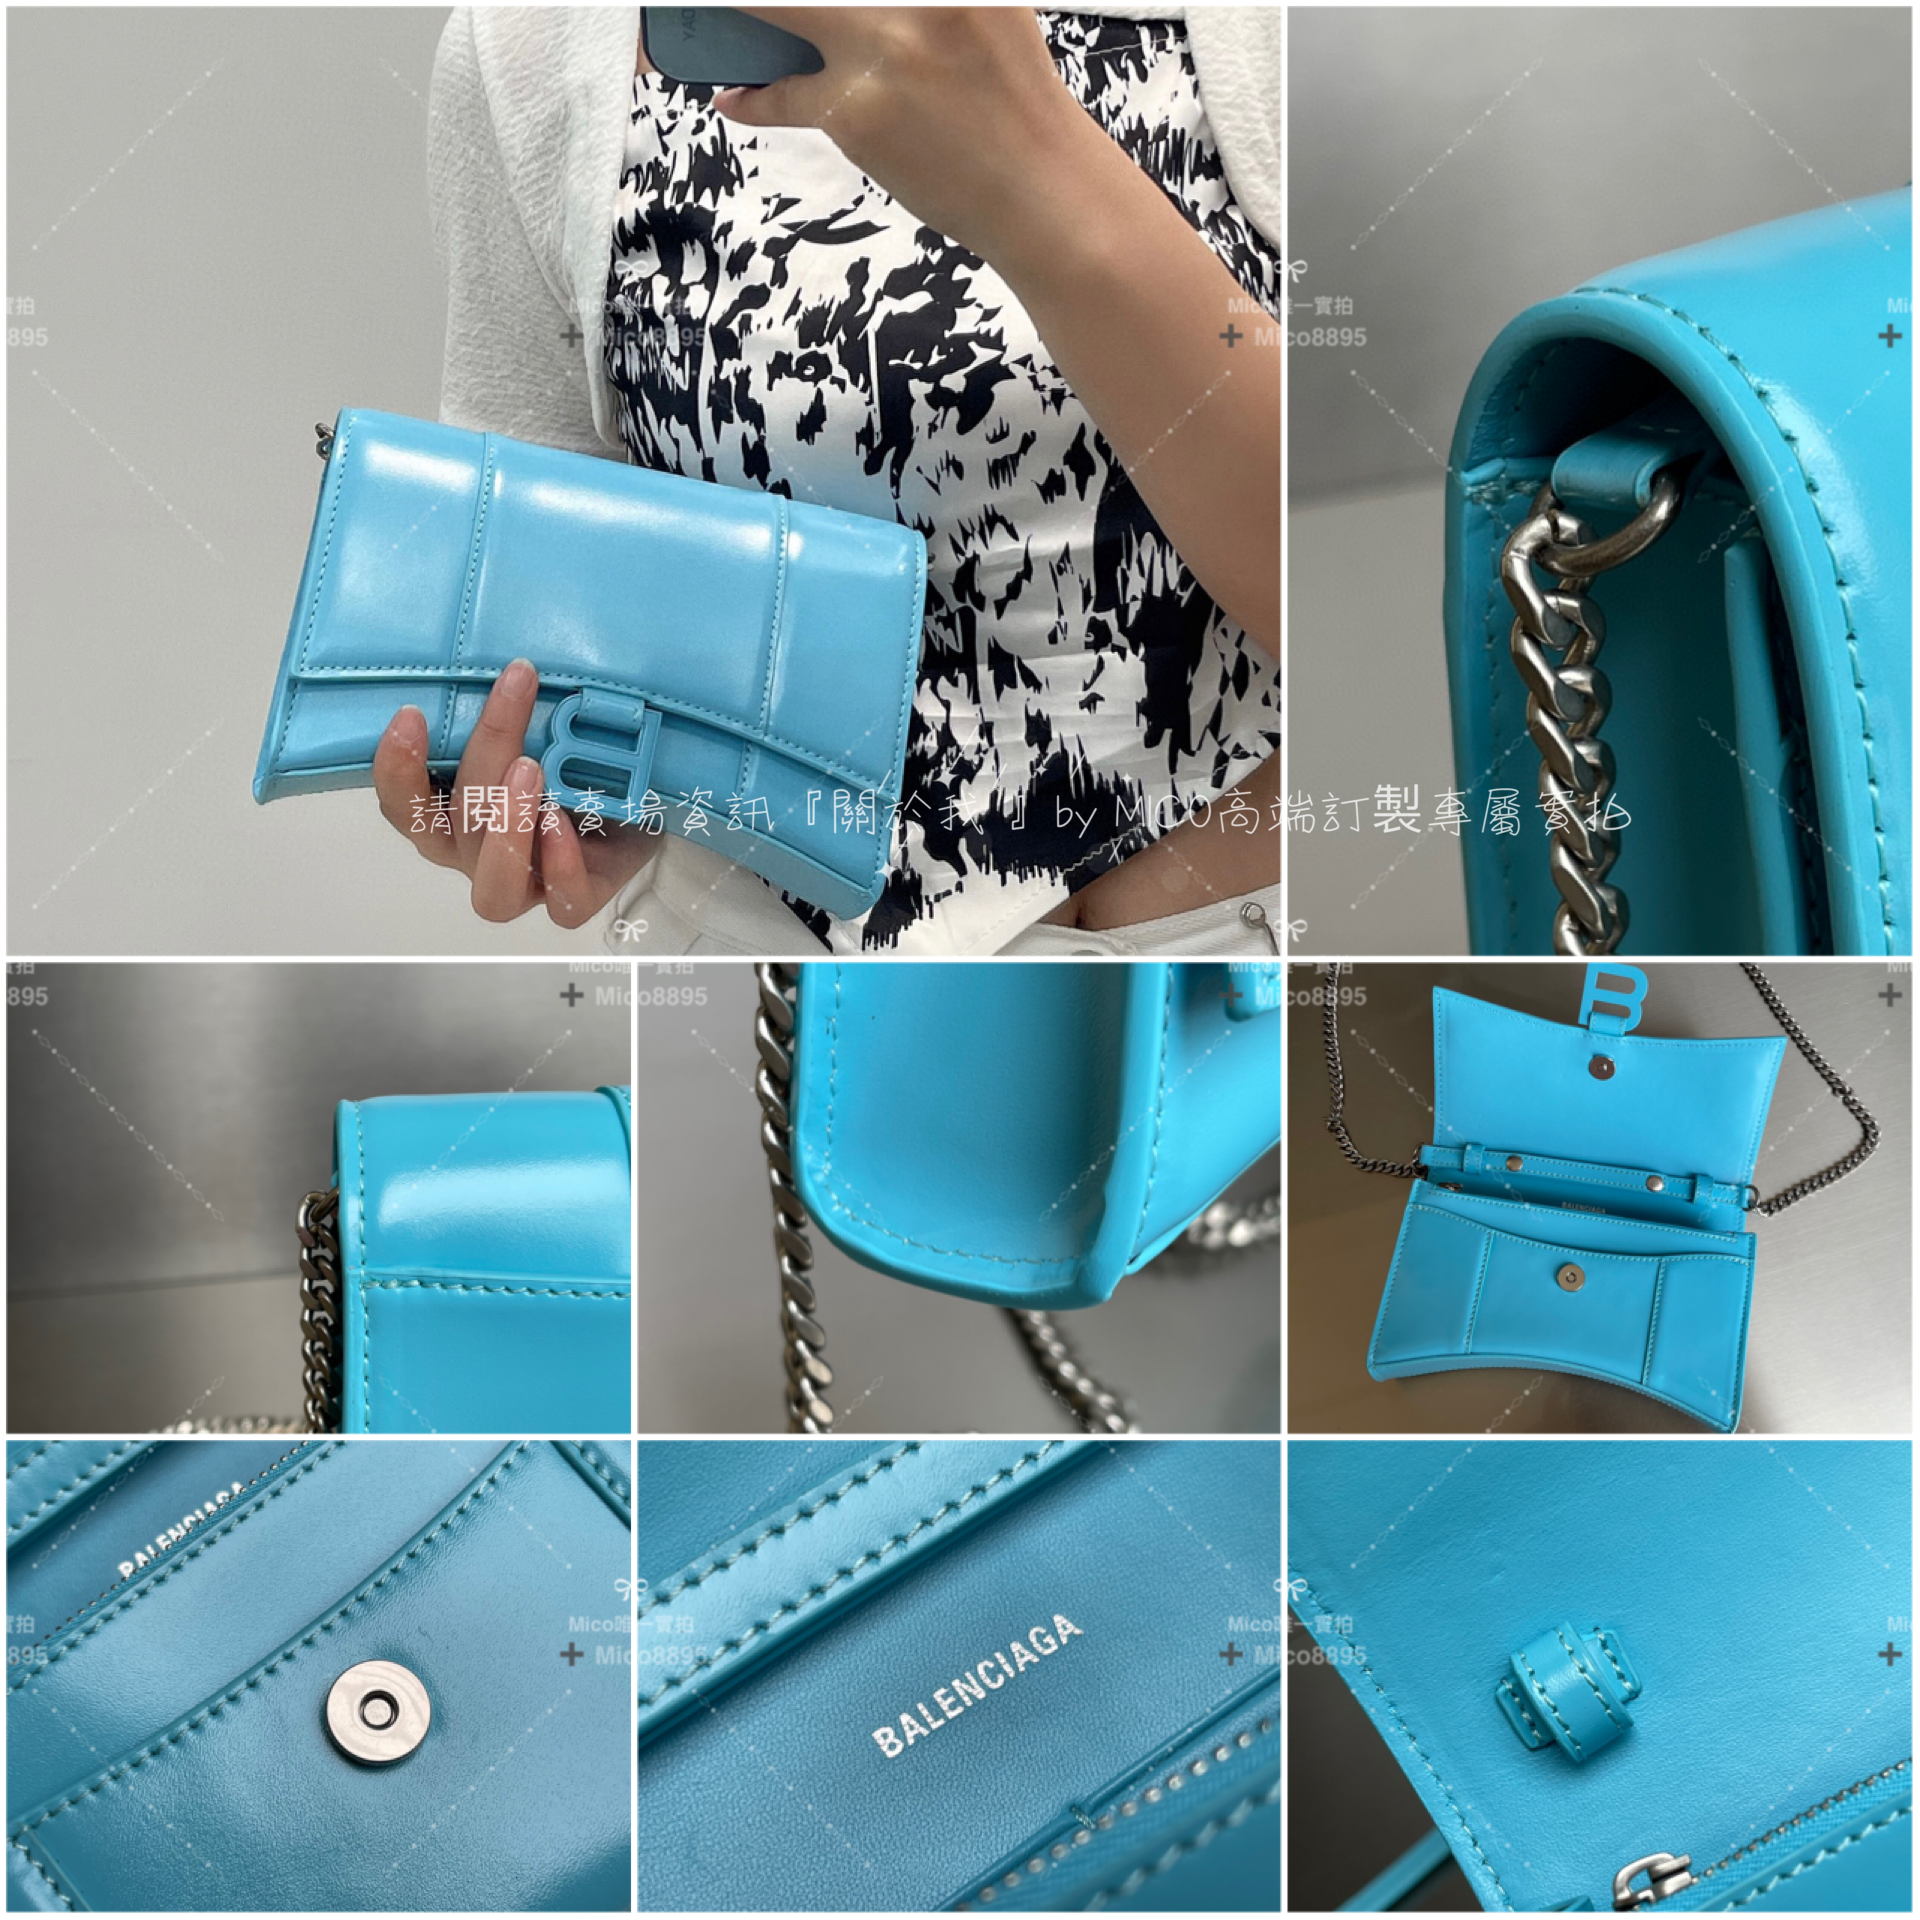 Balenciaga 巴黎世家 平紋藍色/藍色扣 WOC 沙漏包/鍊條包/錢包 19cm